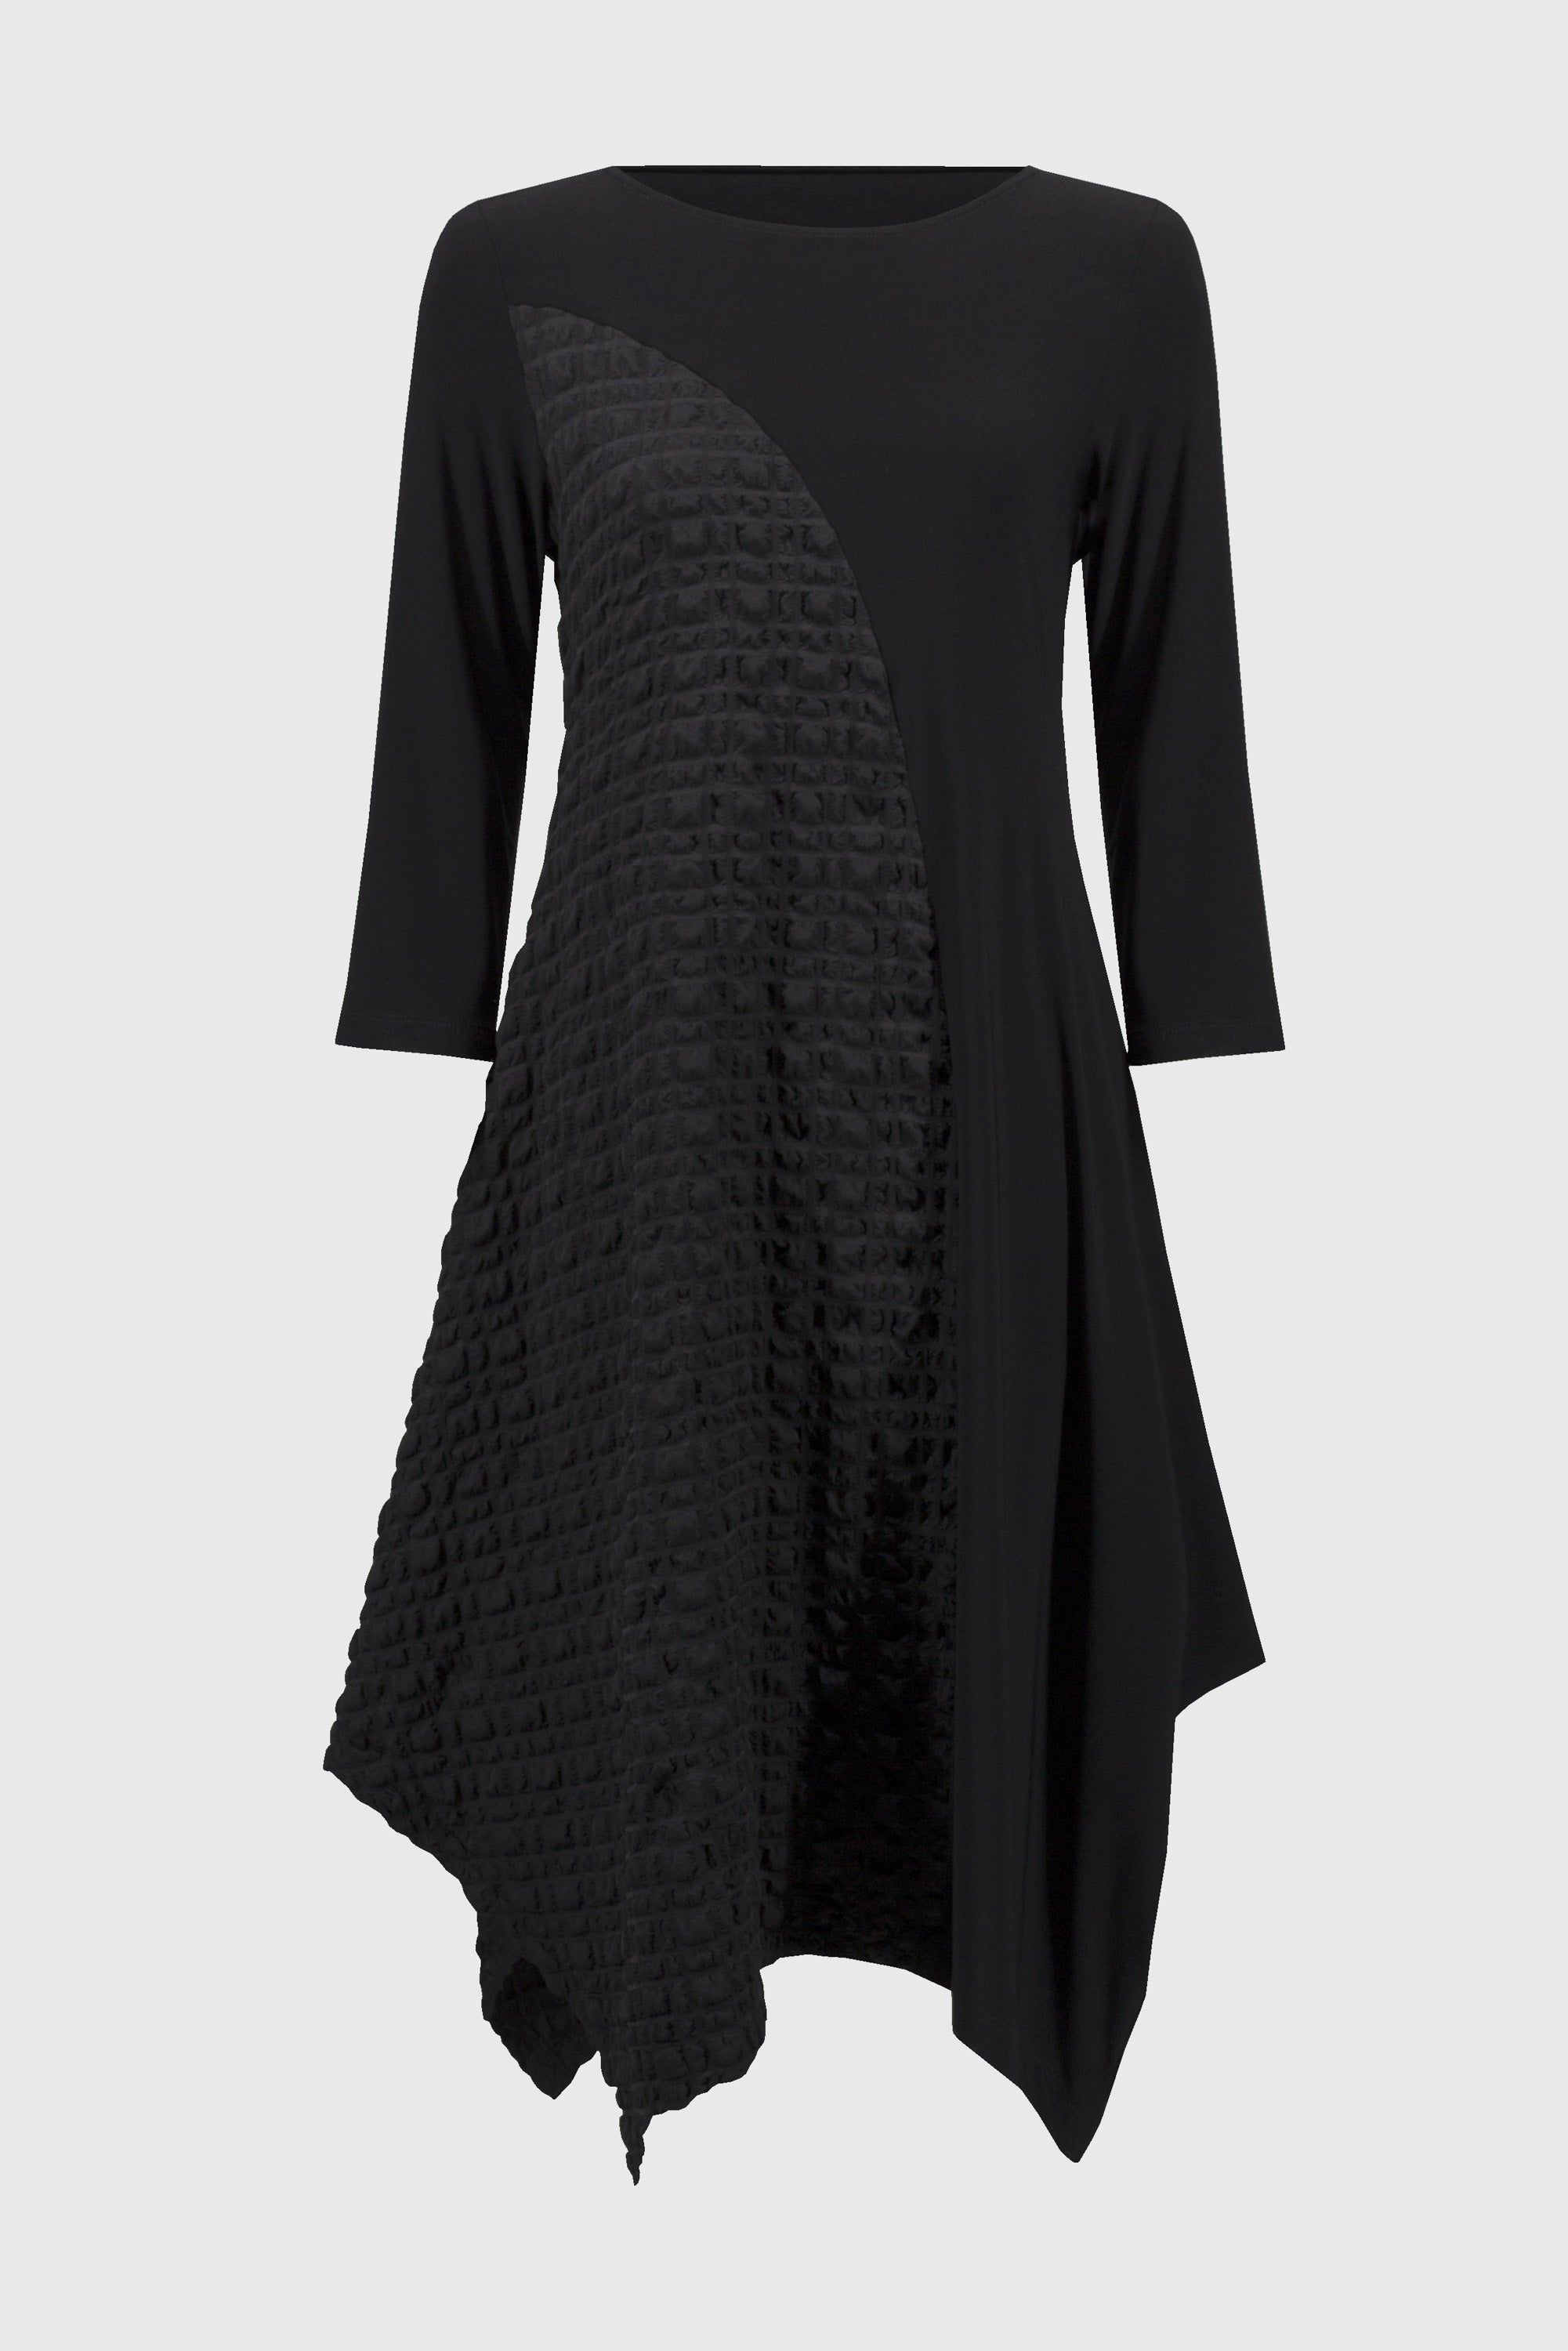 Joseph Ribkoff Jacquard Handkerchief Dress 244037 - Black